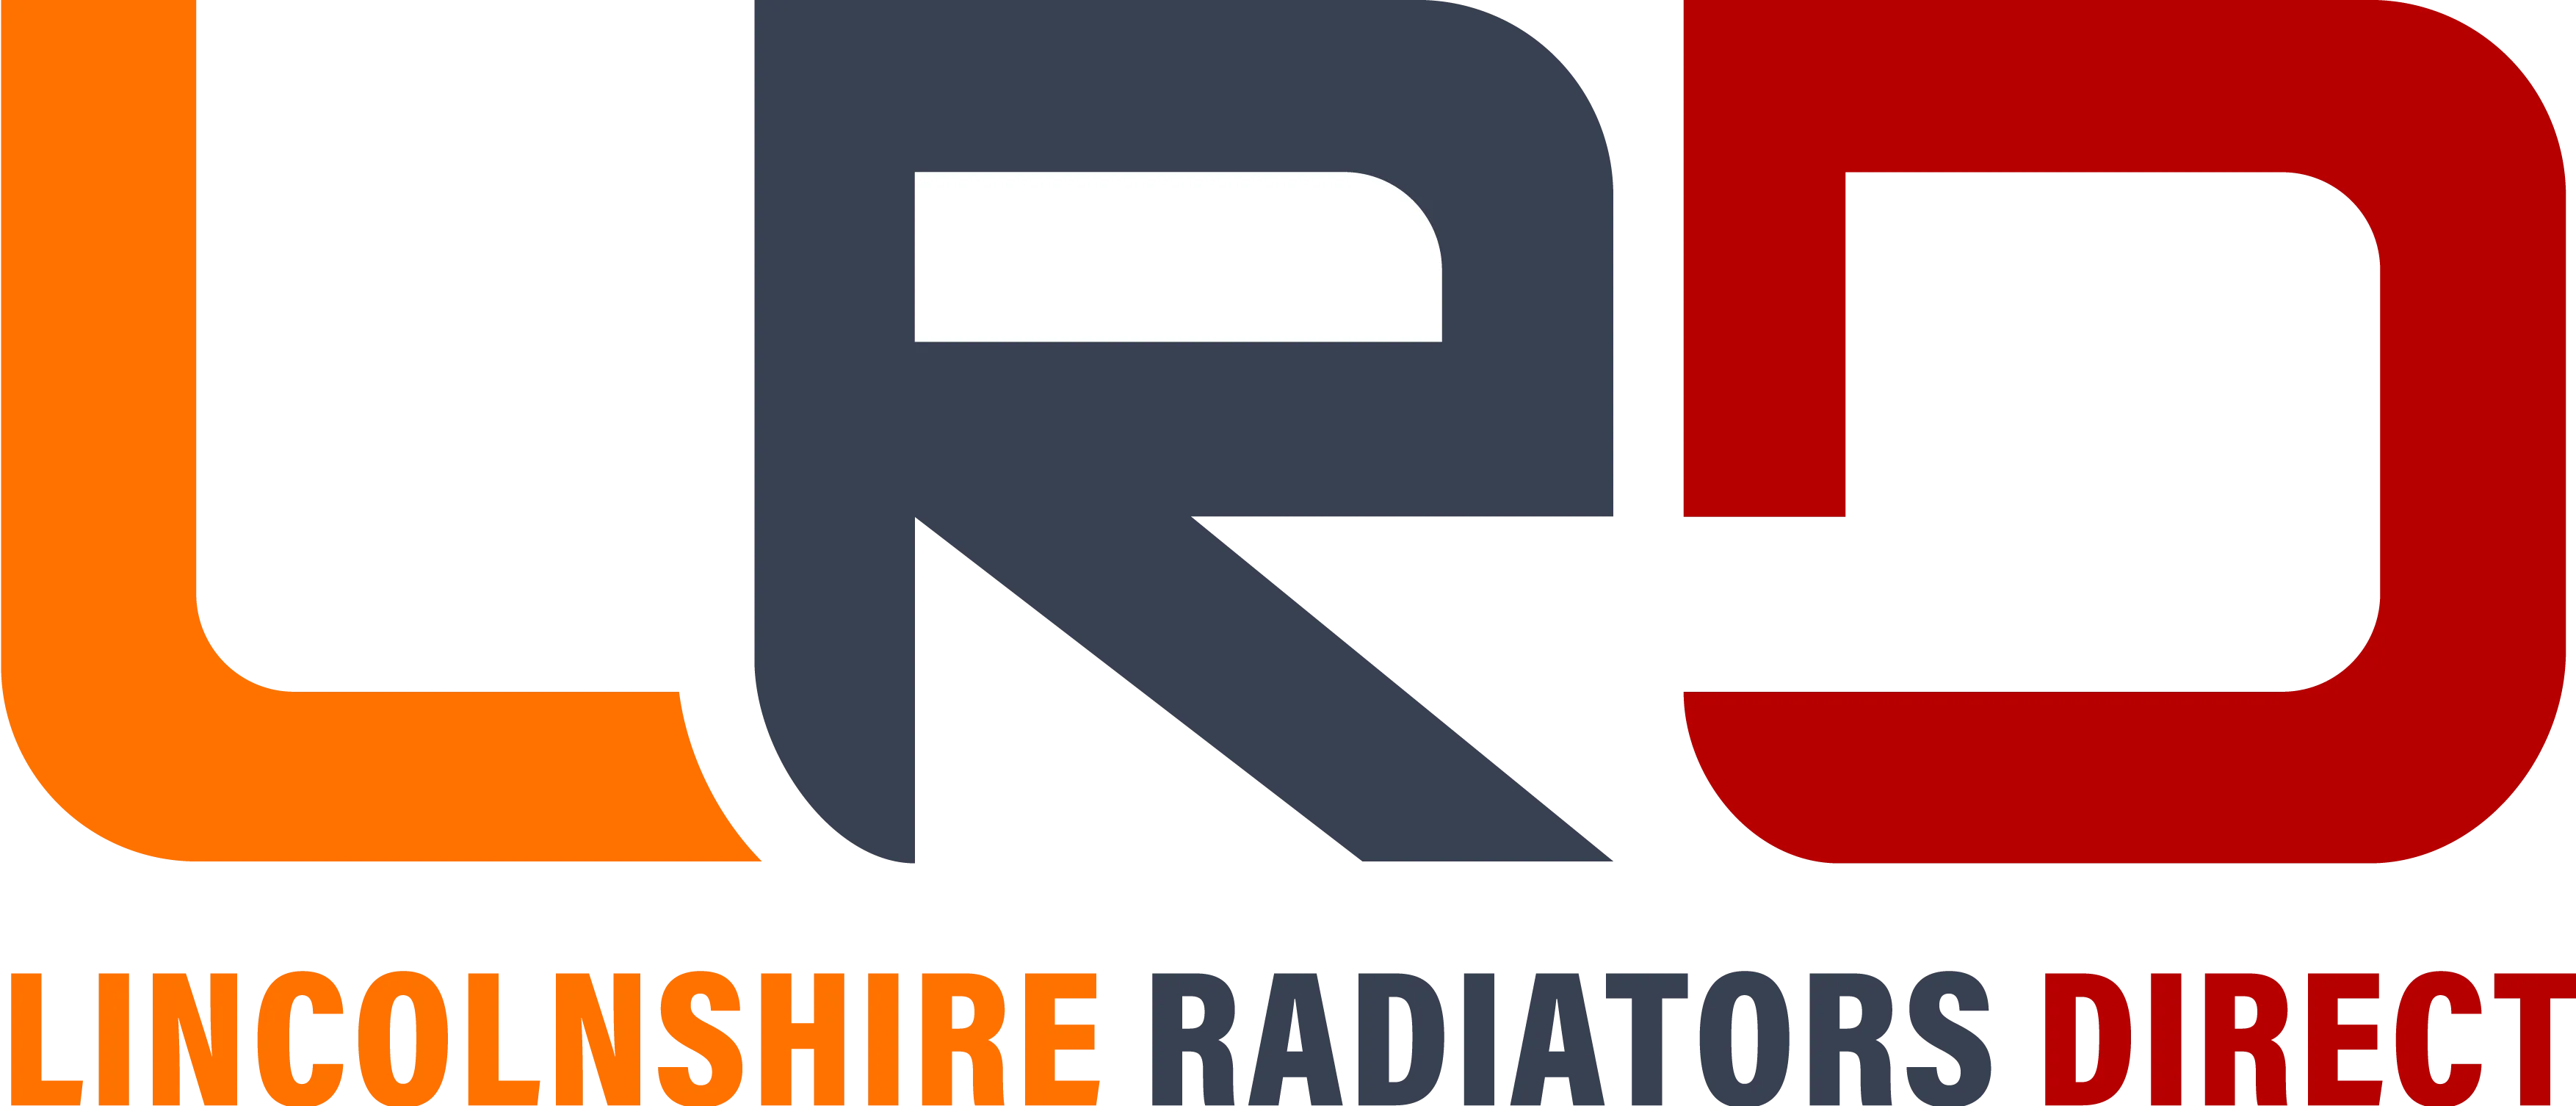 Lincolnshire Radiators Direct Voucher 